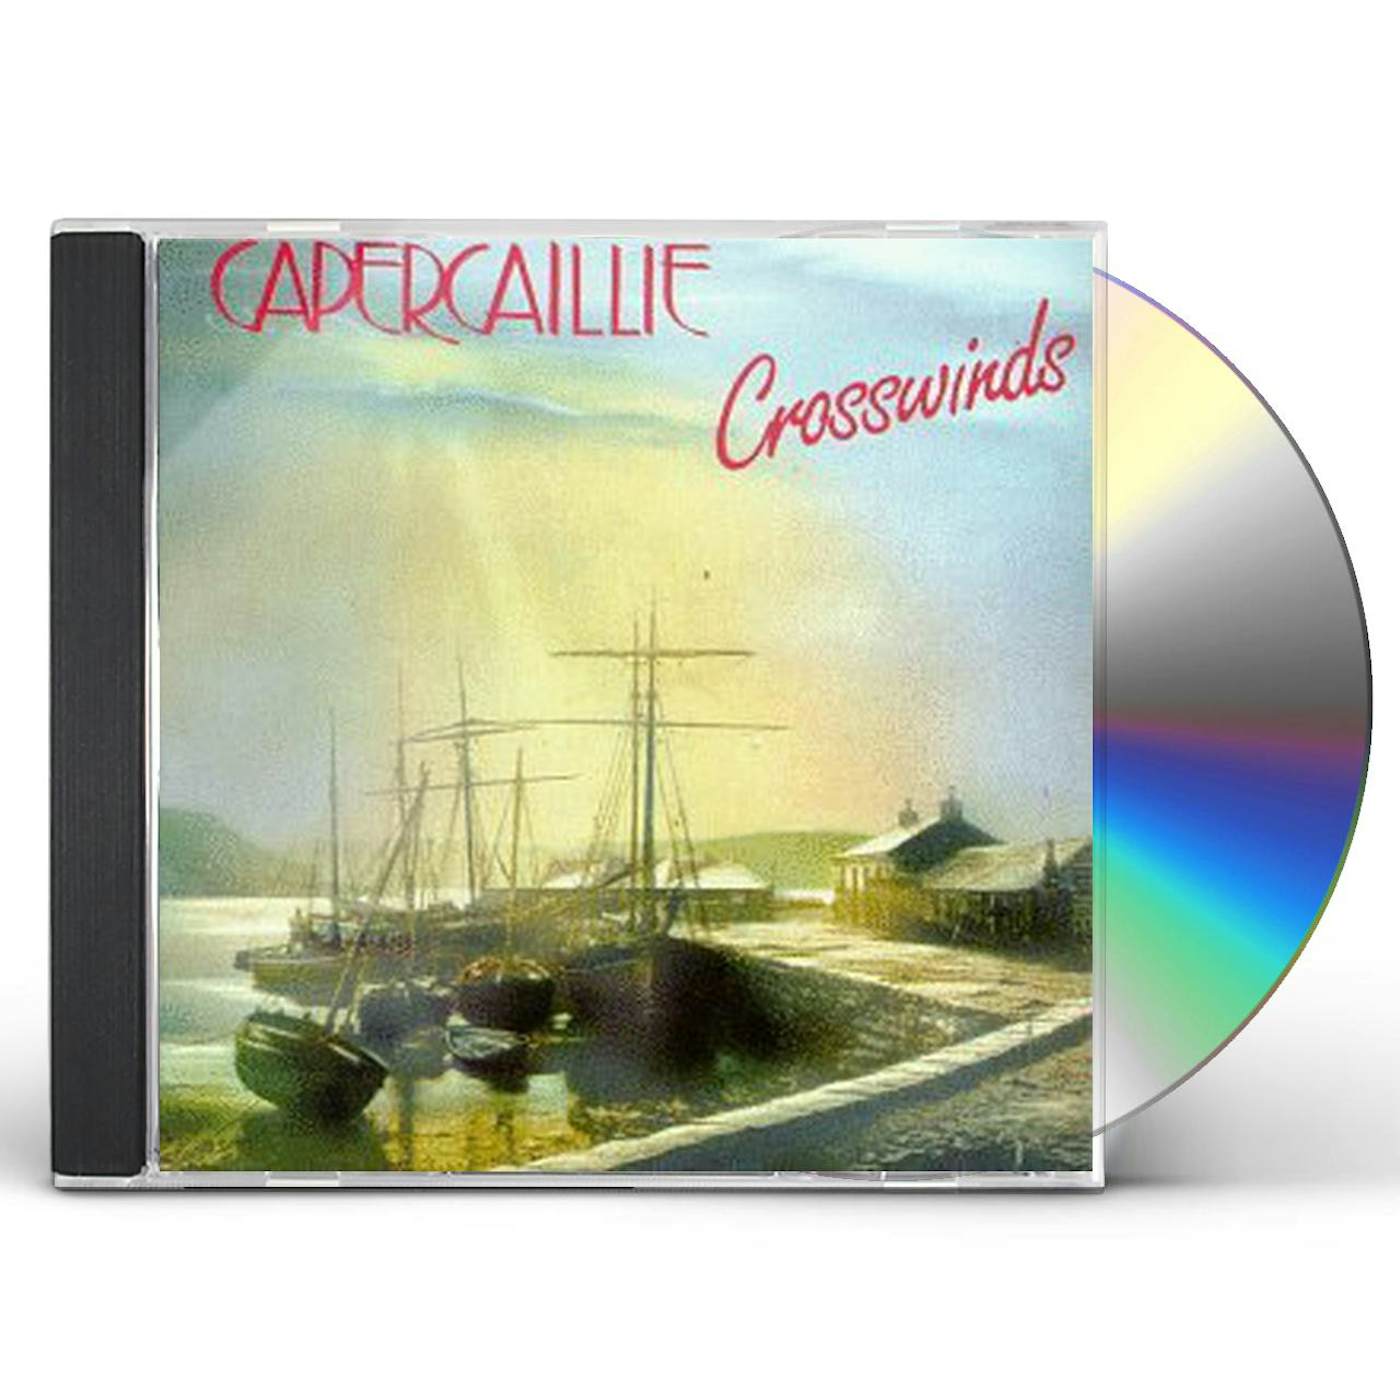 Capercaillie CROSSWINDS CD